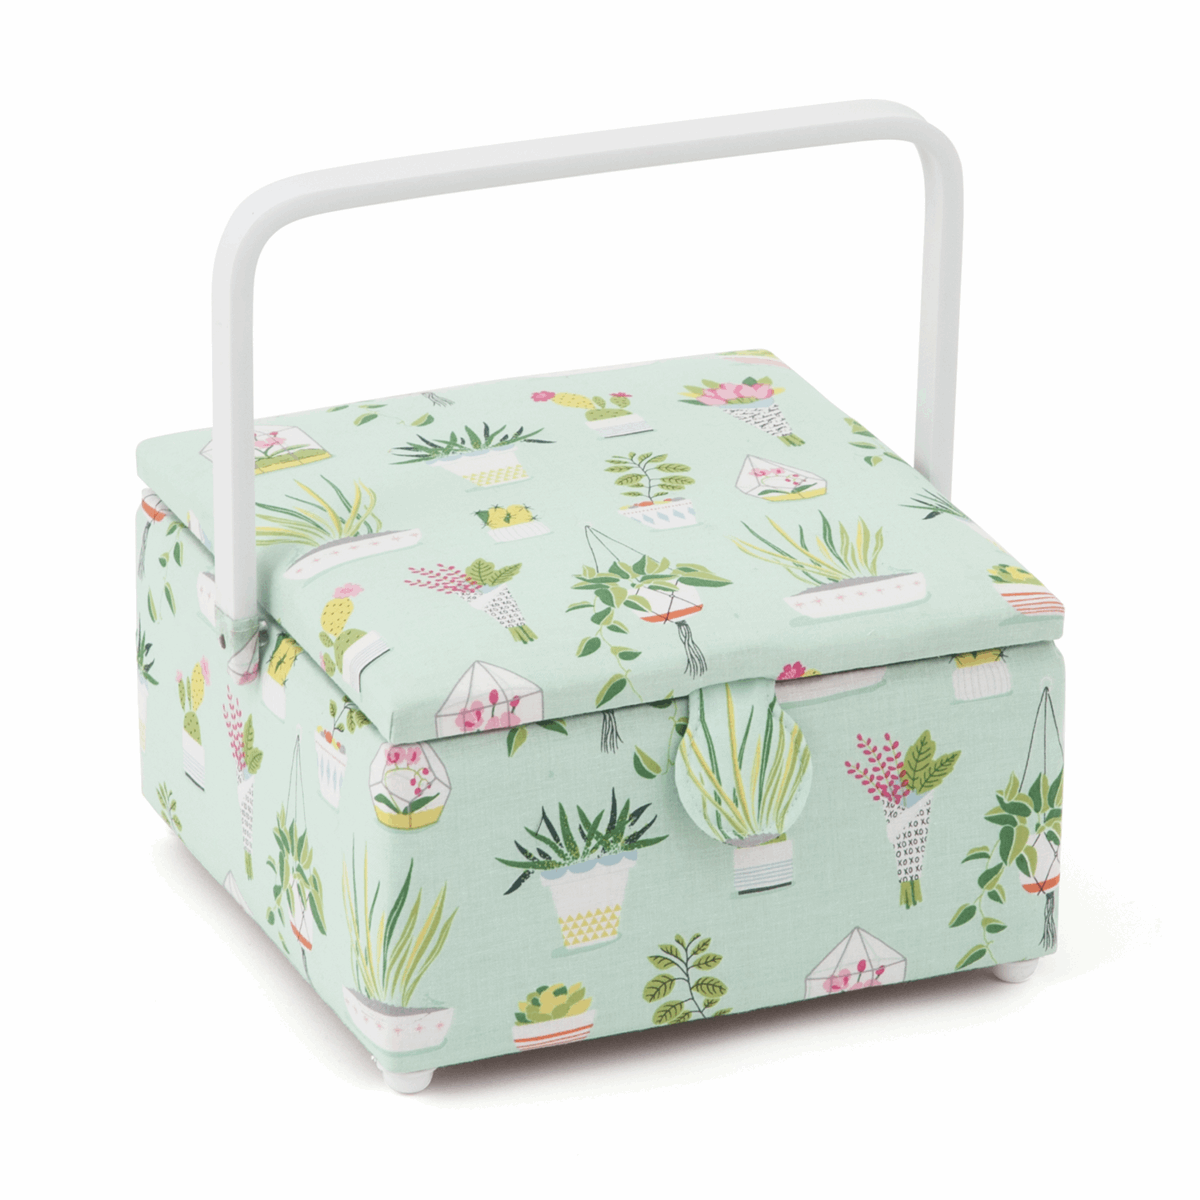 Plant Life Sewing Box - Medium